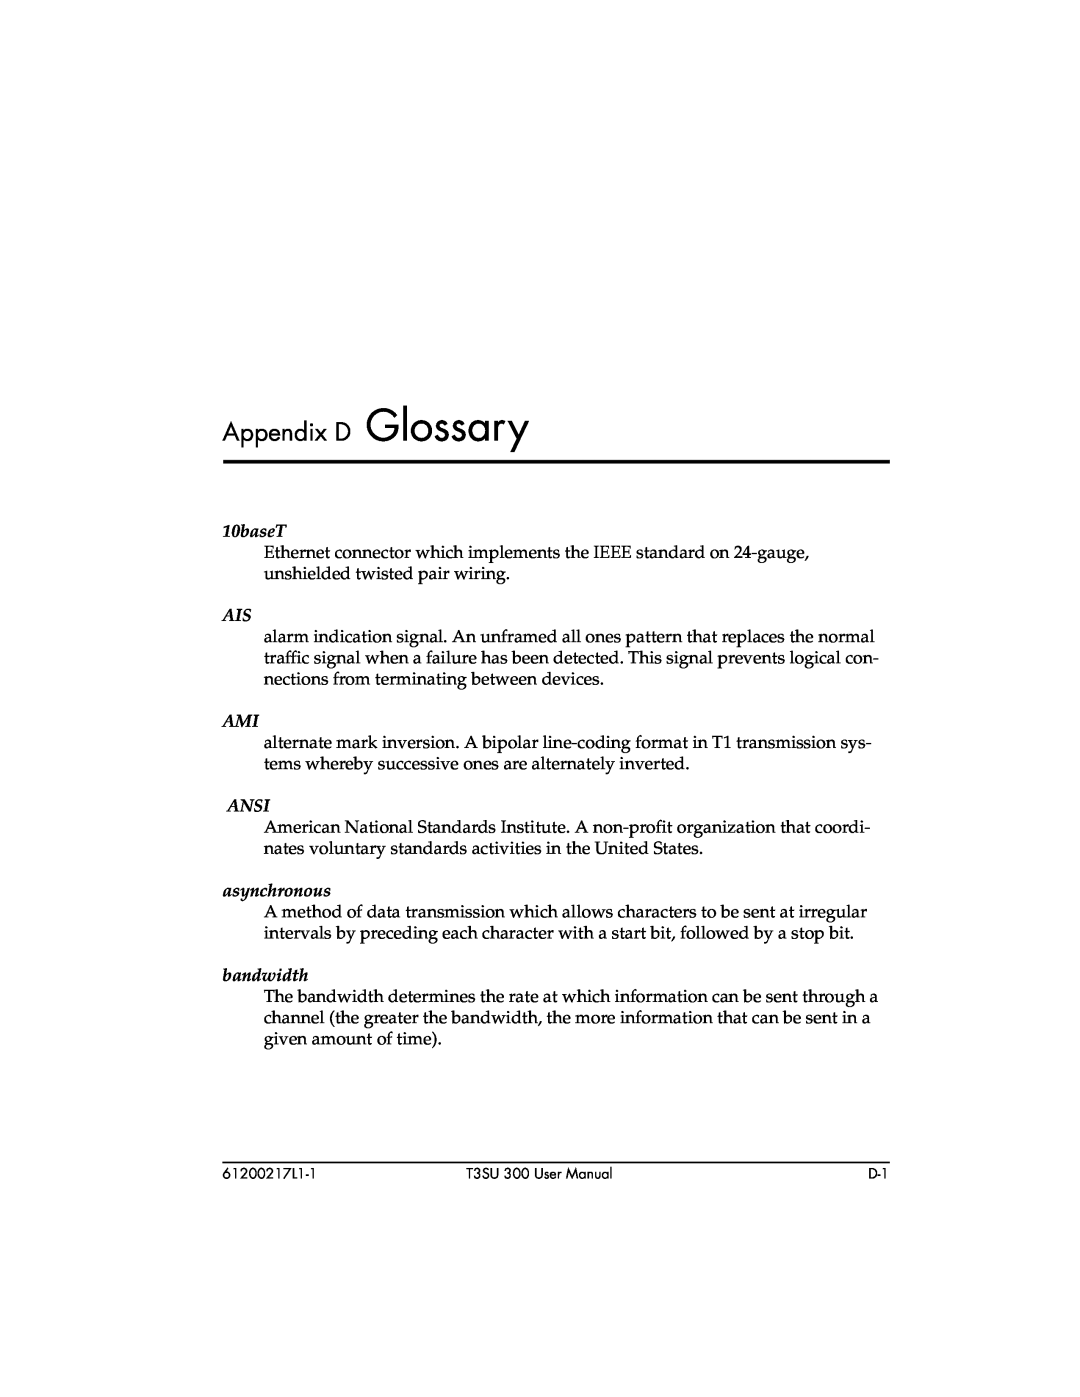 ADTRAN T3SU 300 user manual Appendix D Glossary, 10baseT, Ansi, asynchronous, bandwidth 